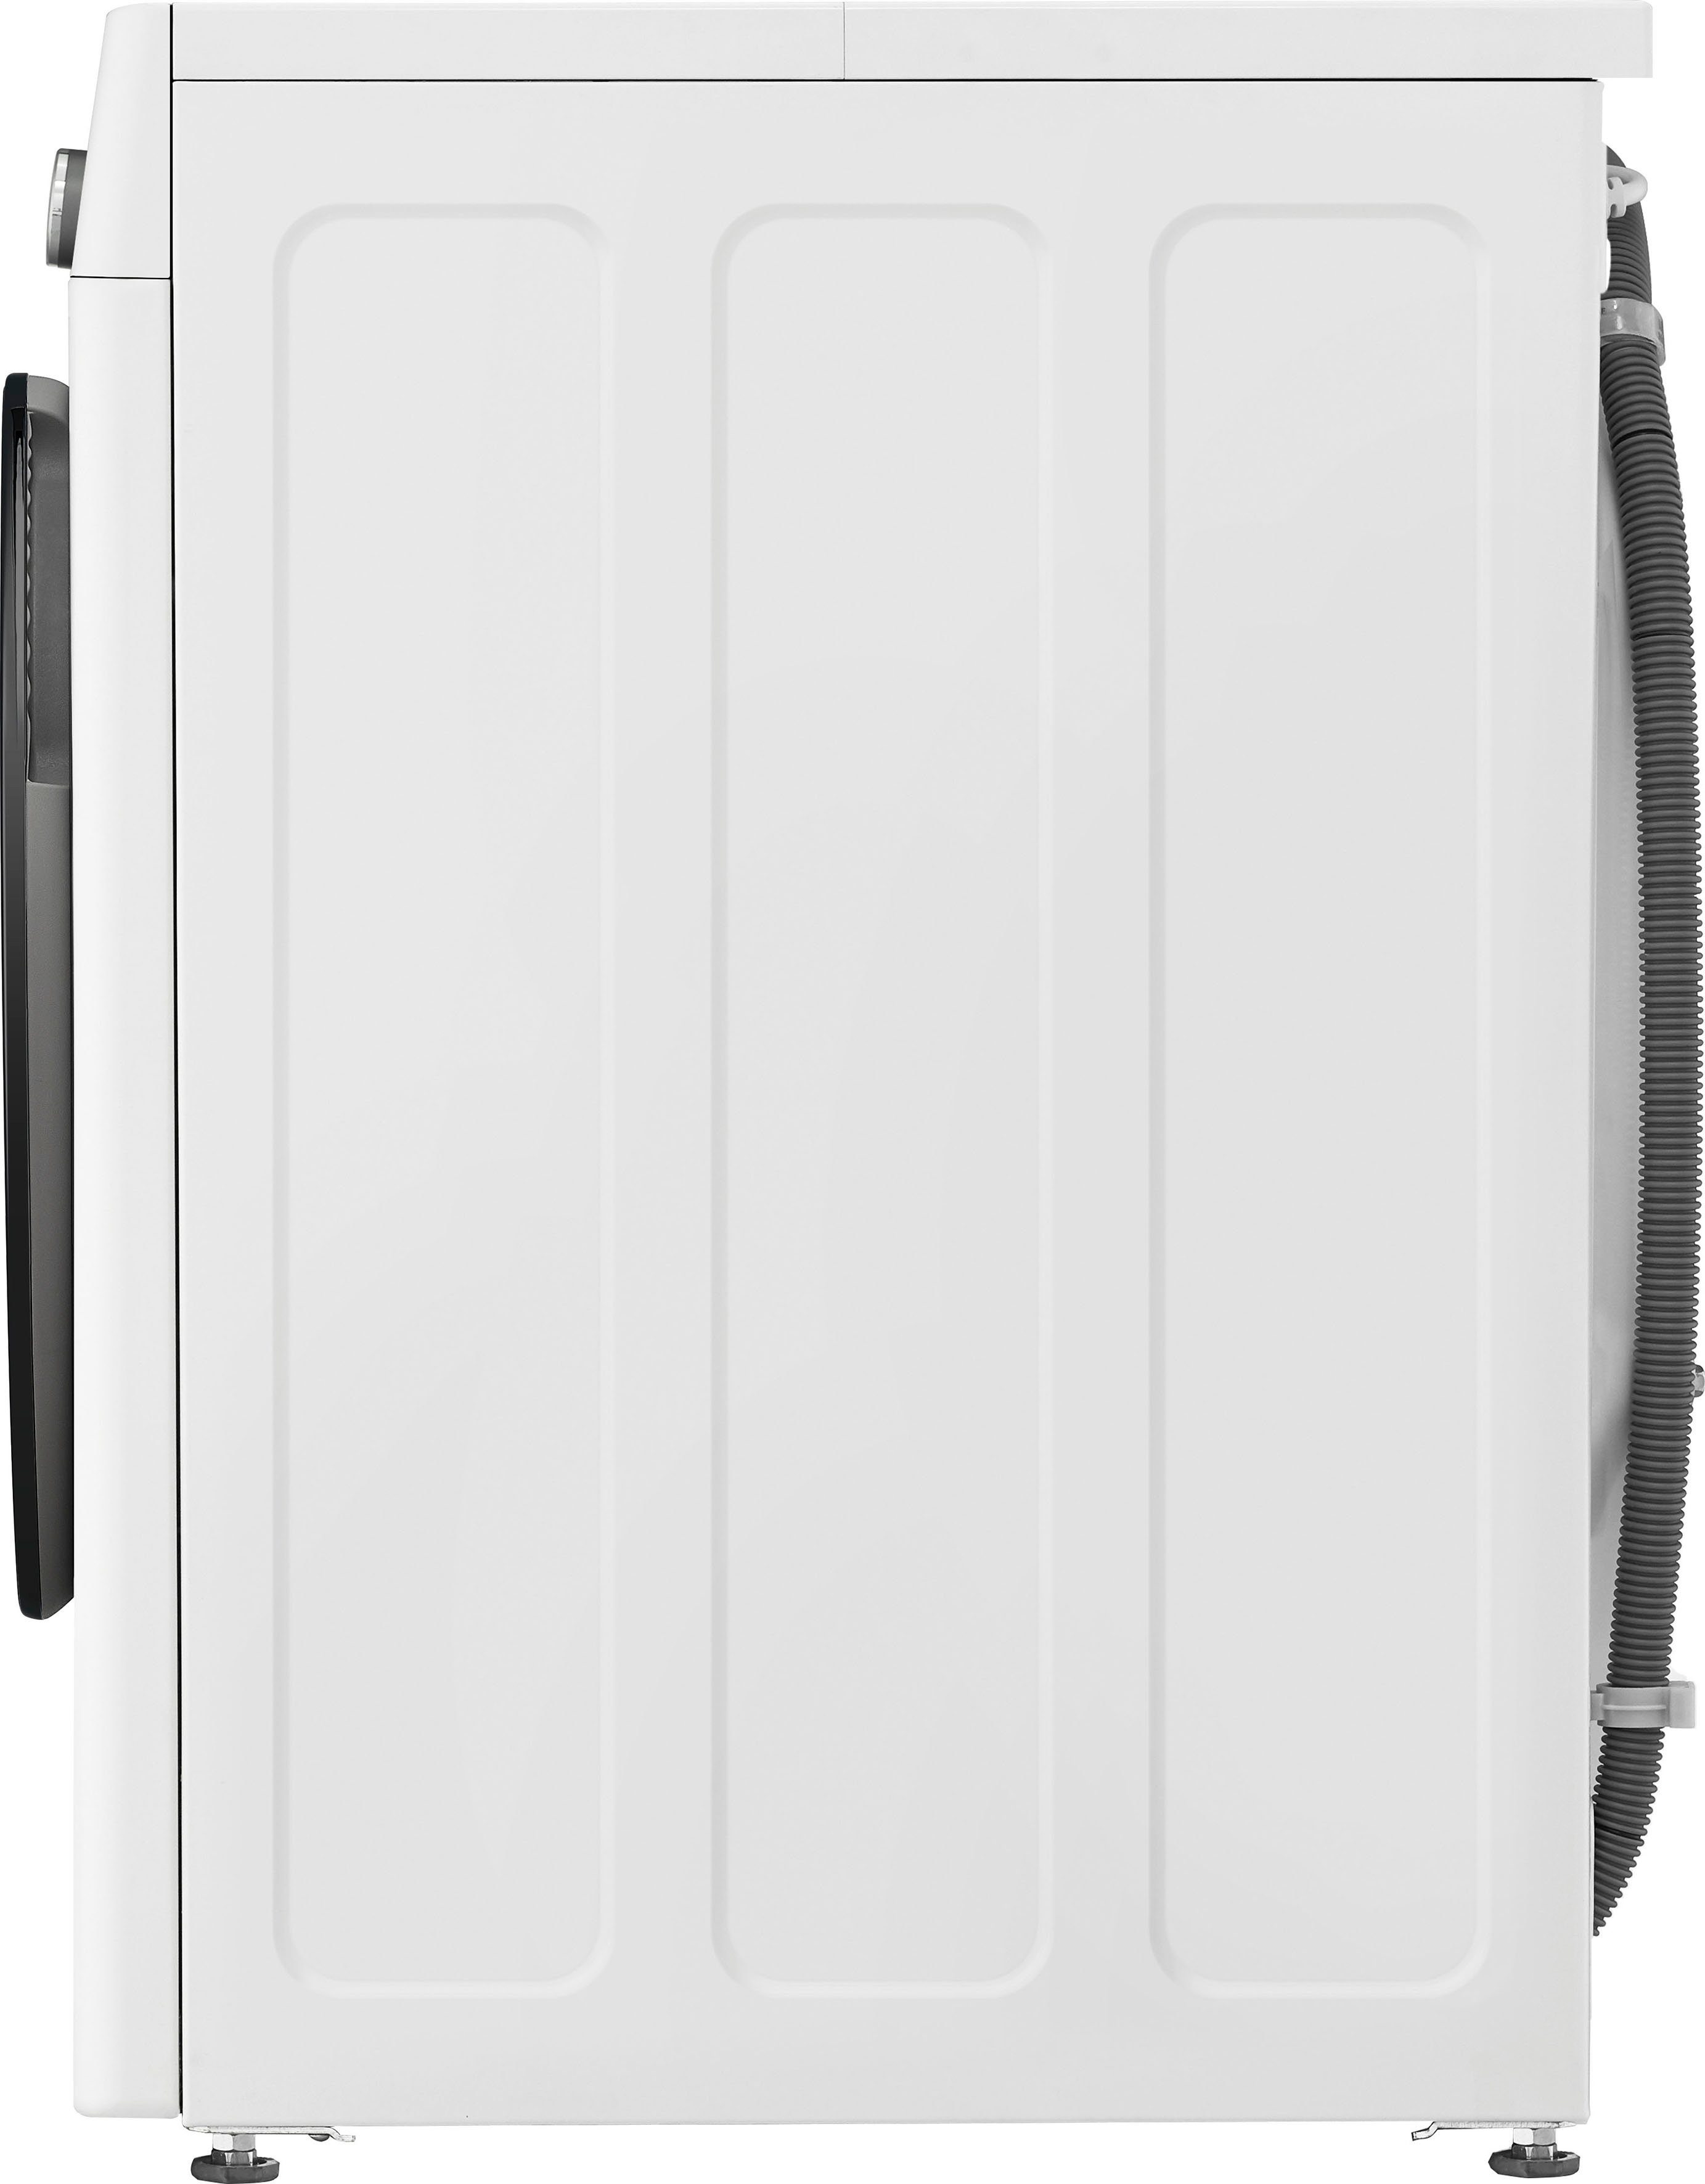 LG Waschmaschine Serie 7 F4WR7031, 13 kg, U/min 1400